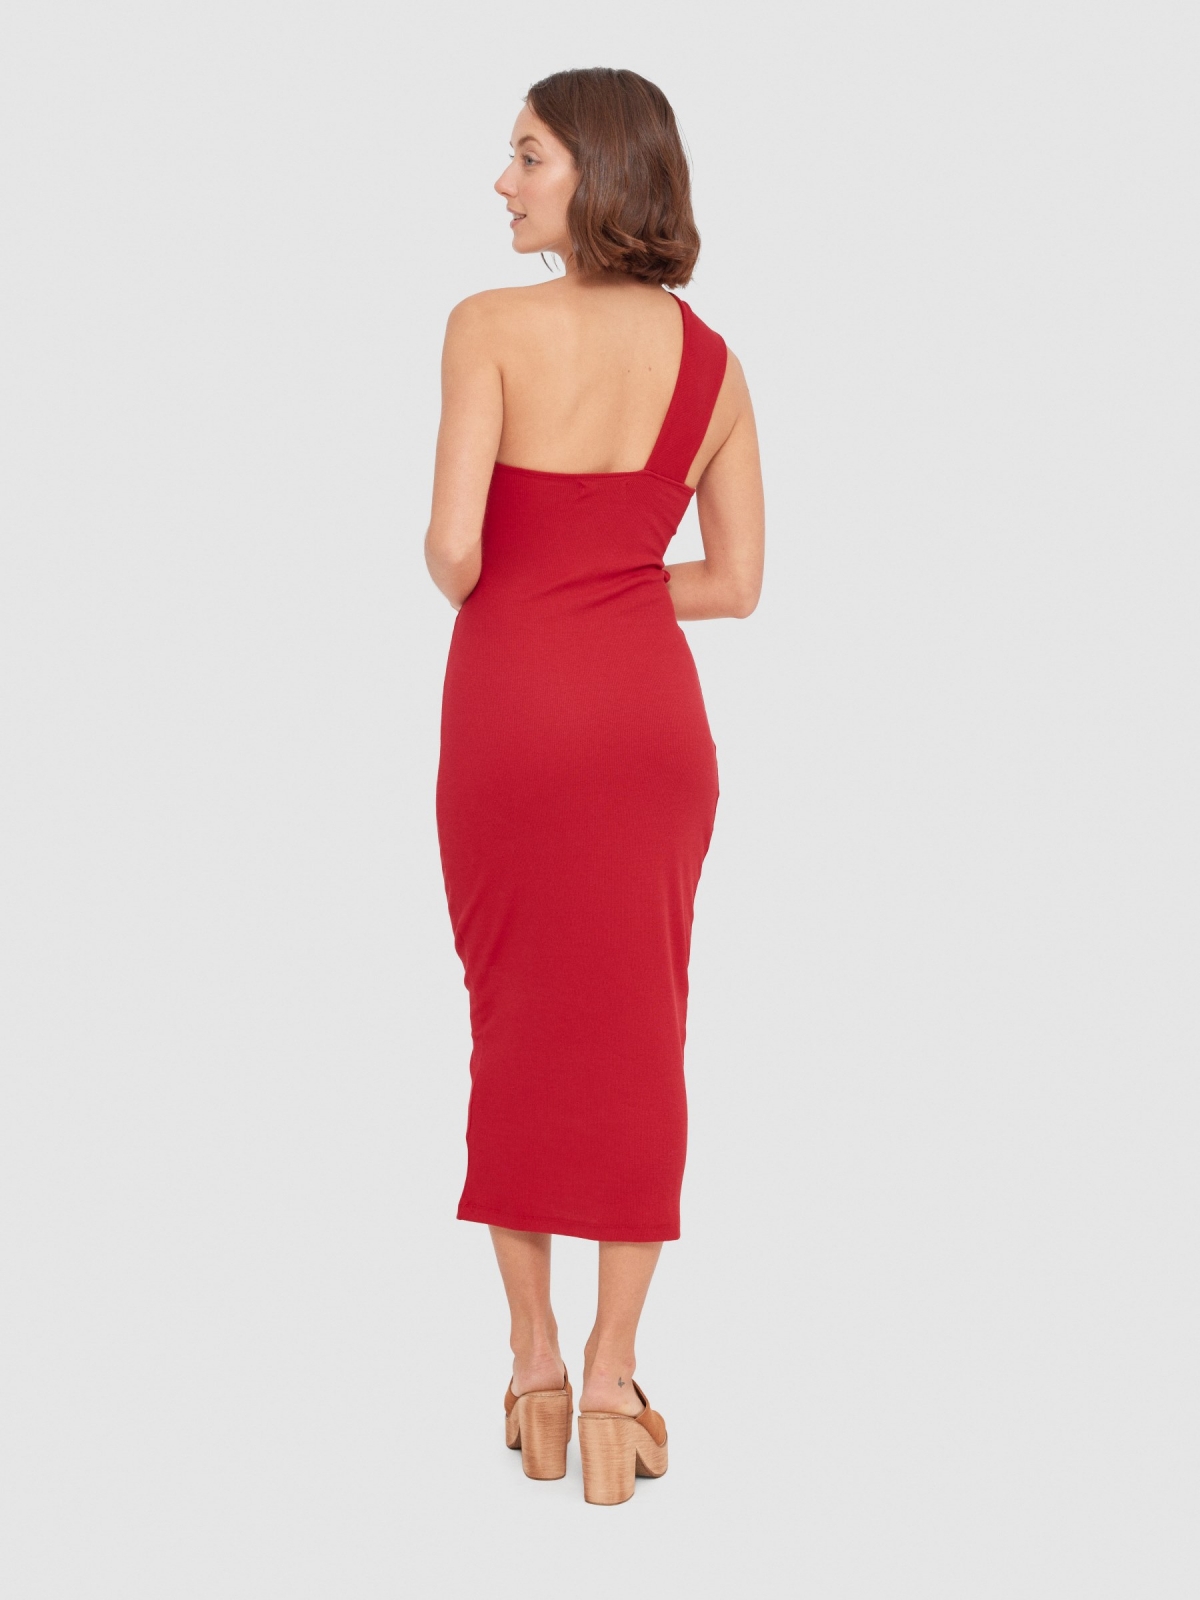 One asymmetric strap midi dress red middle back view